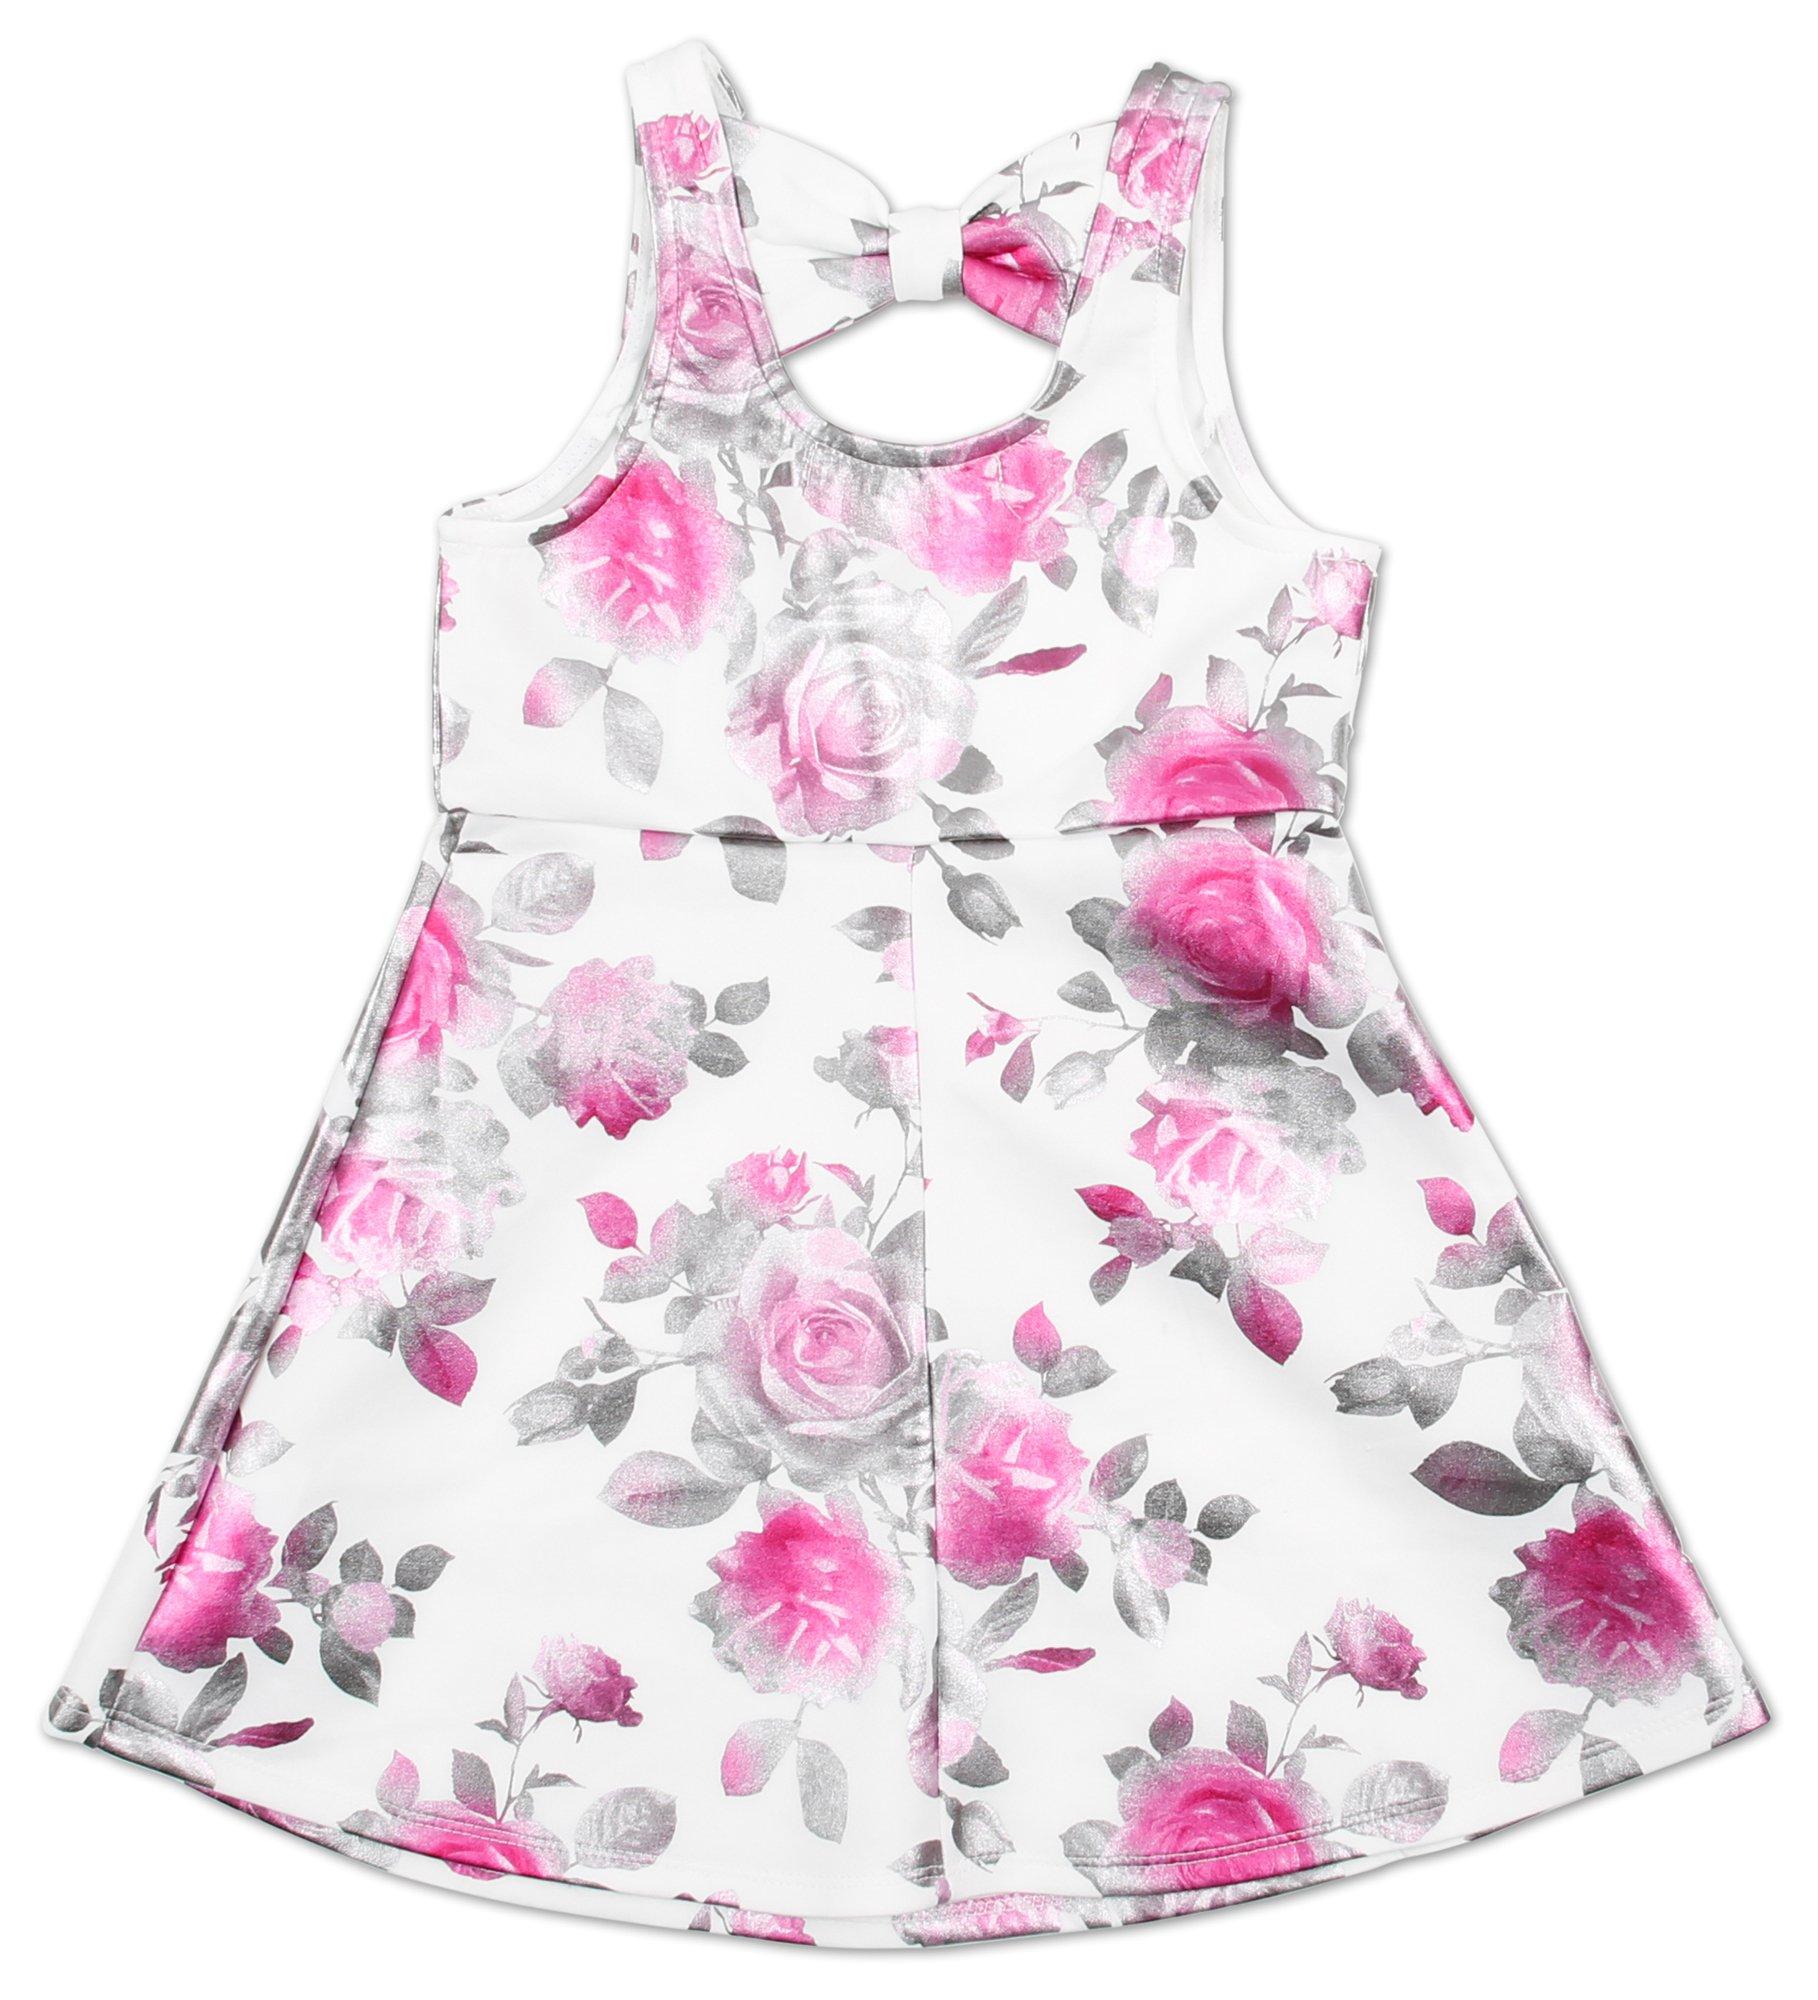 Toddler Girls Sleeveless Floral Print Dress